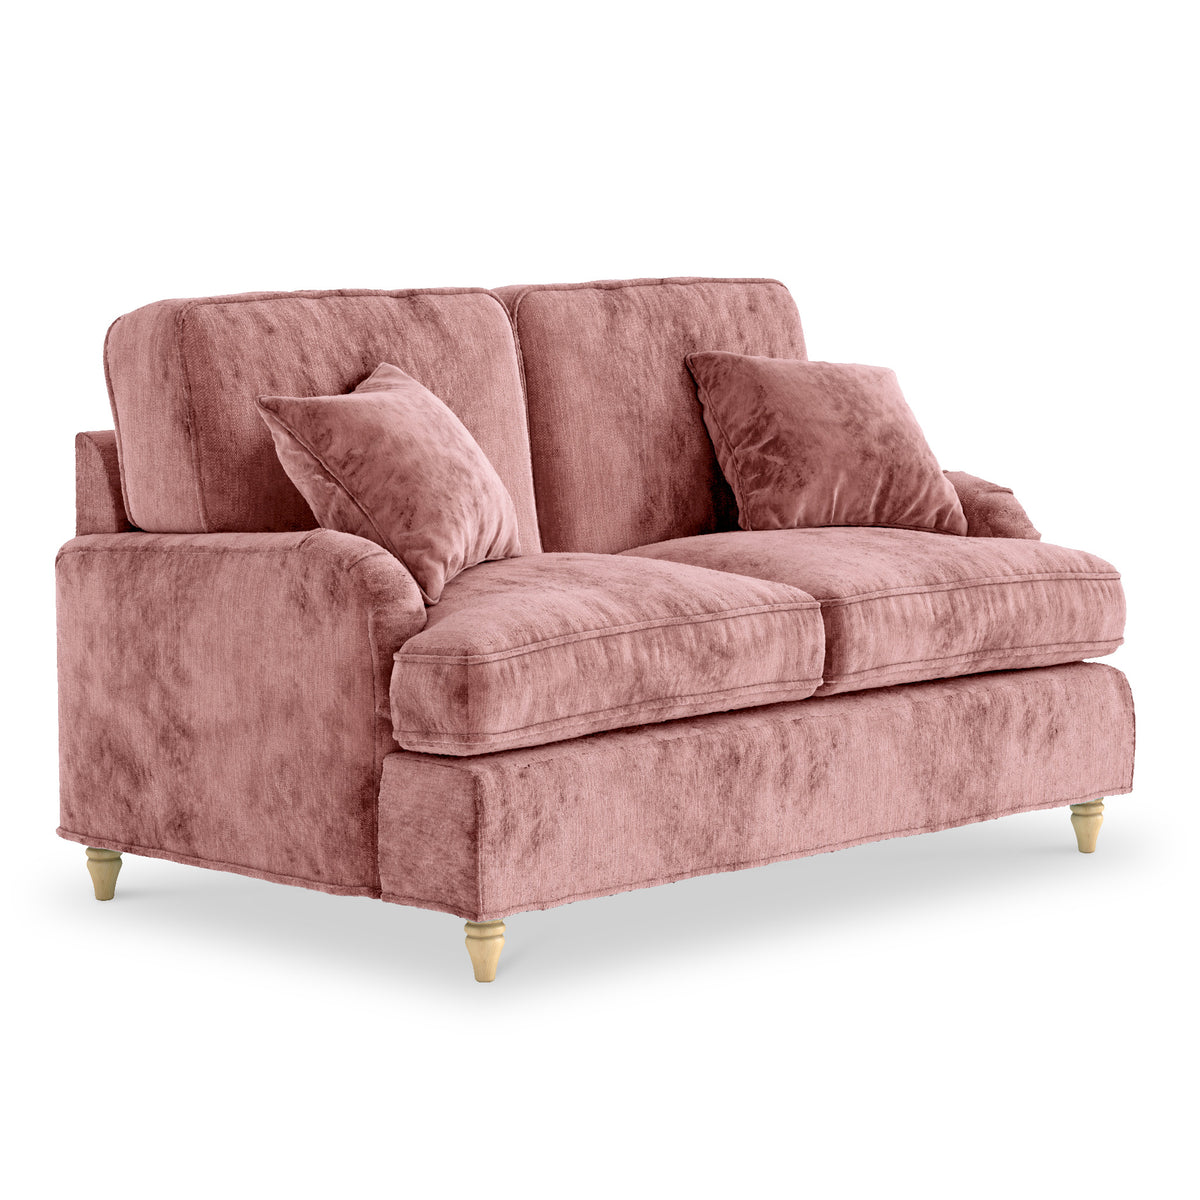 Arthur Plum Pink 2 Seater Sofa from Roseland Furniture